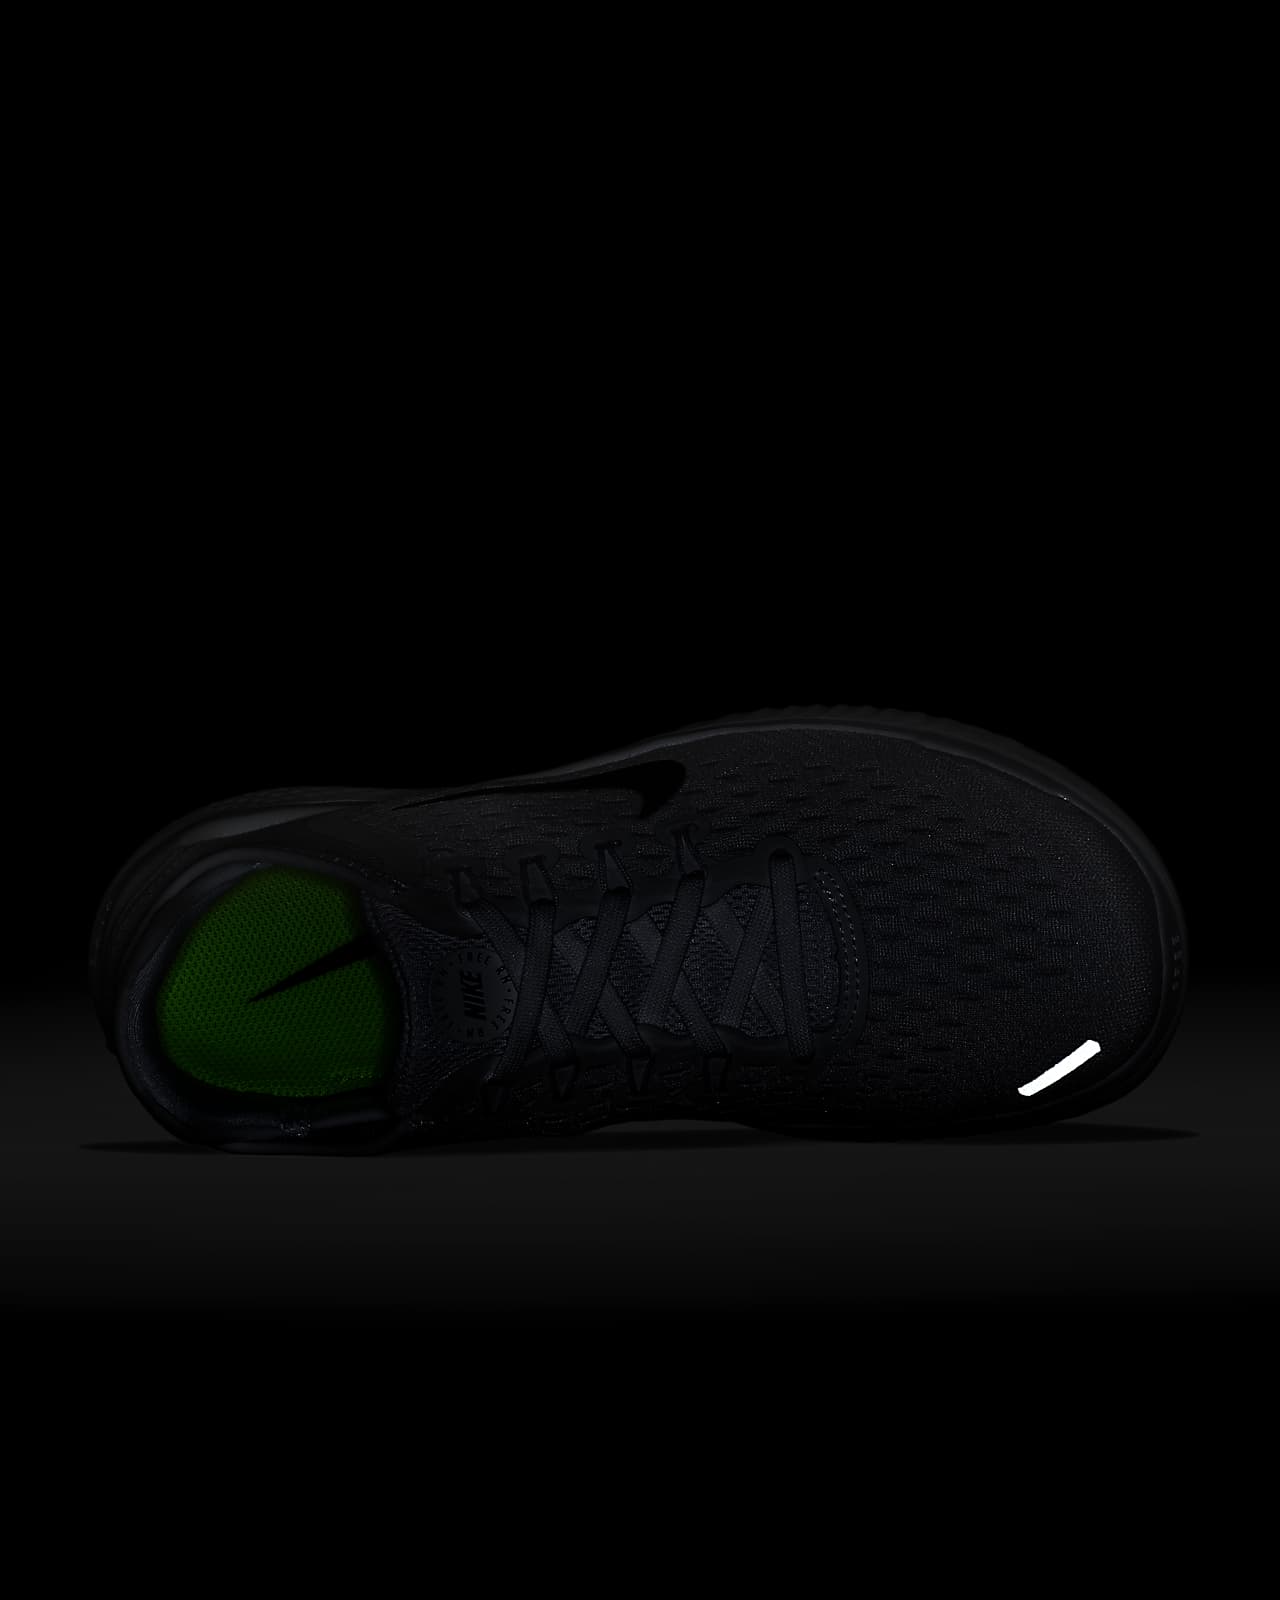 RN 2018 Running Shoes. Nike.com